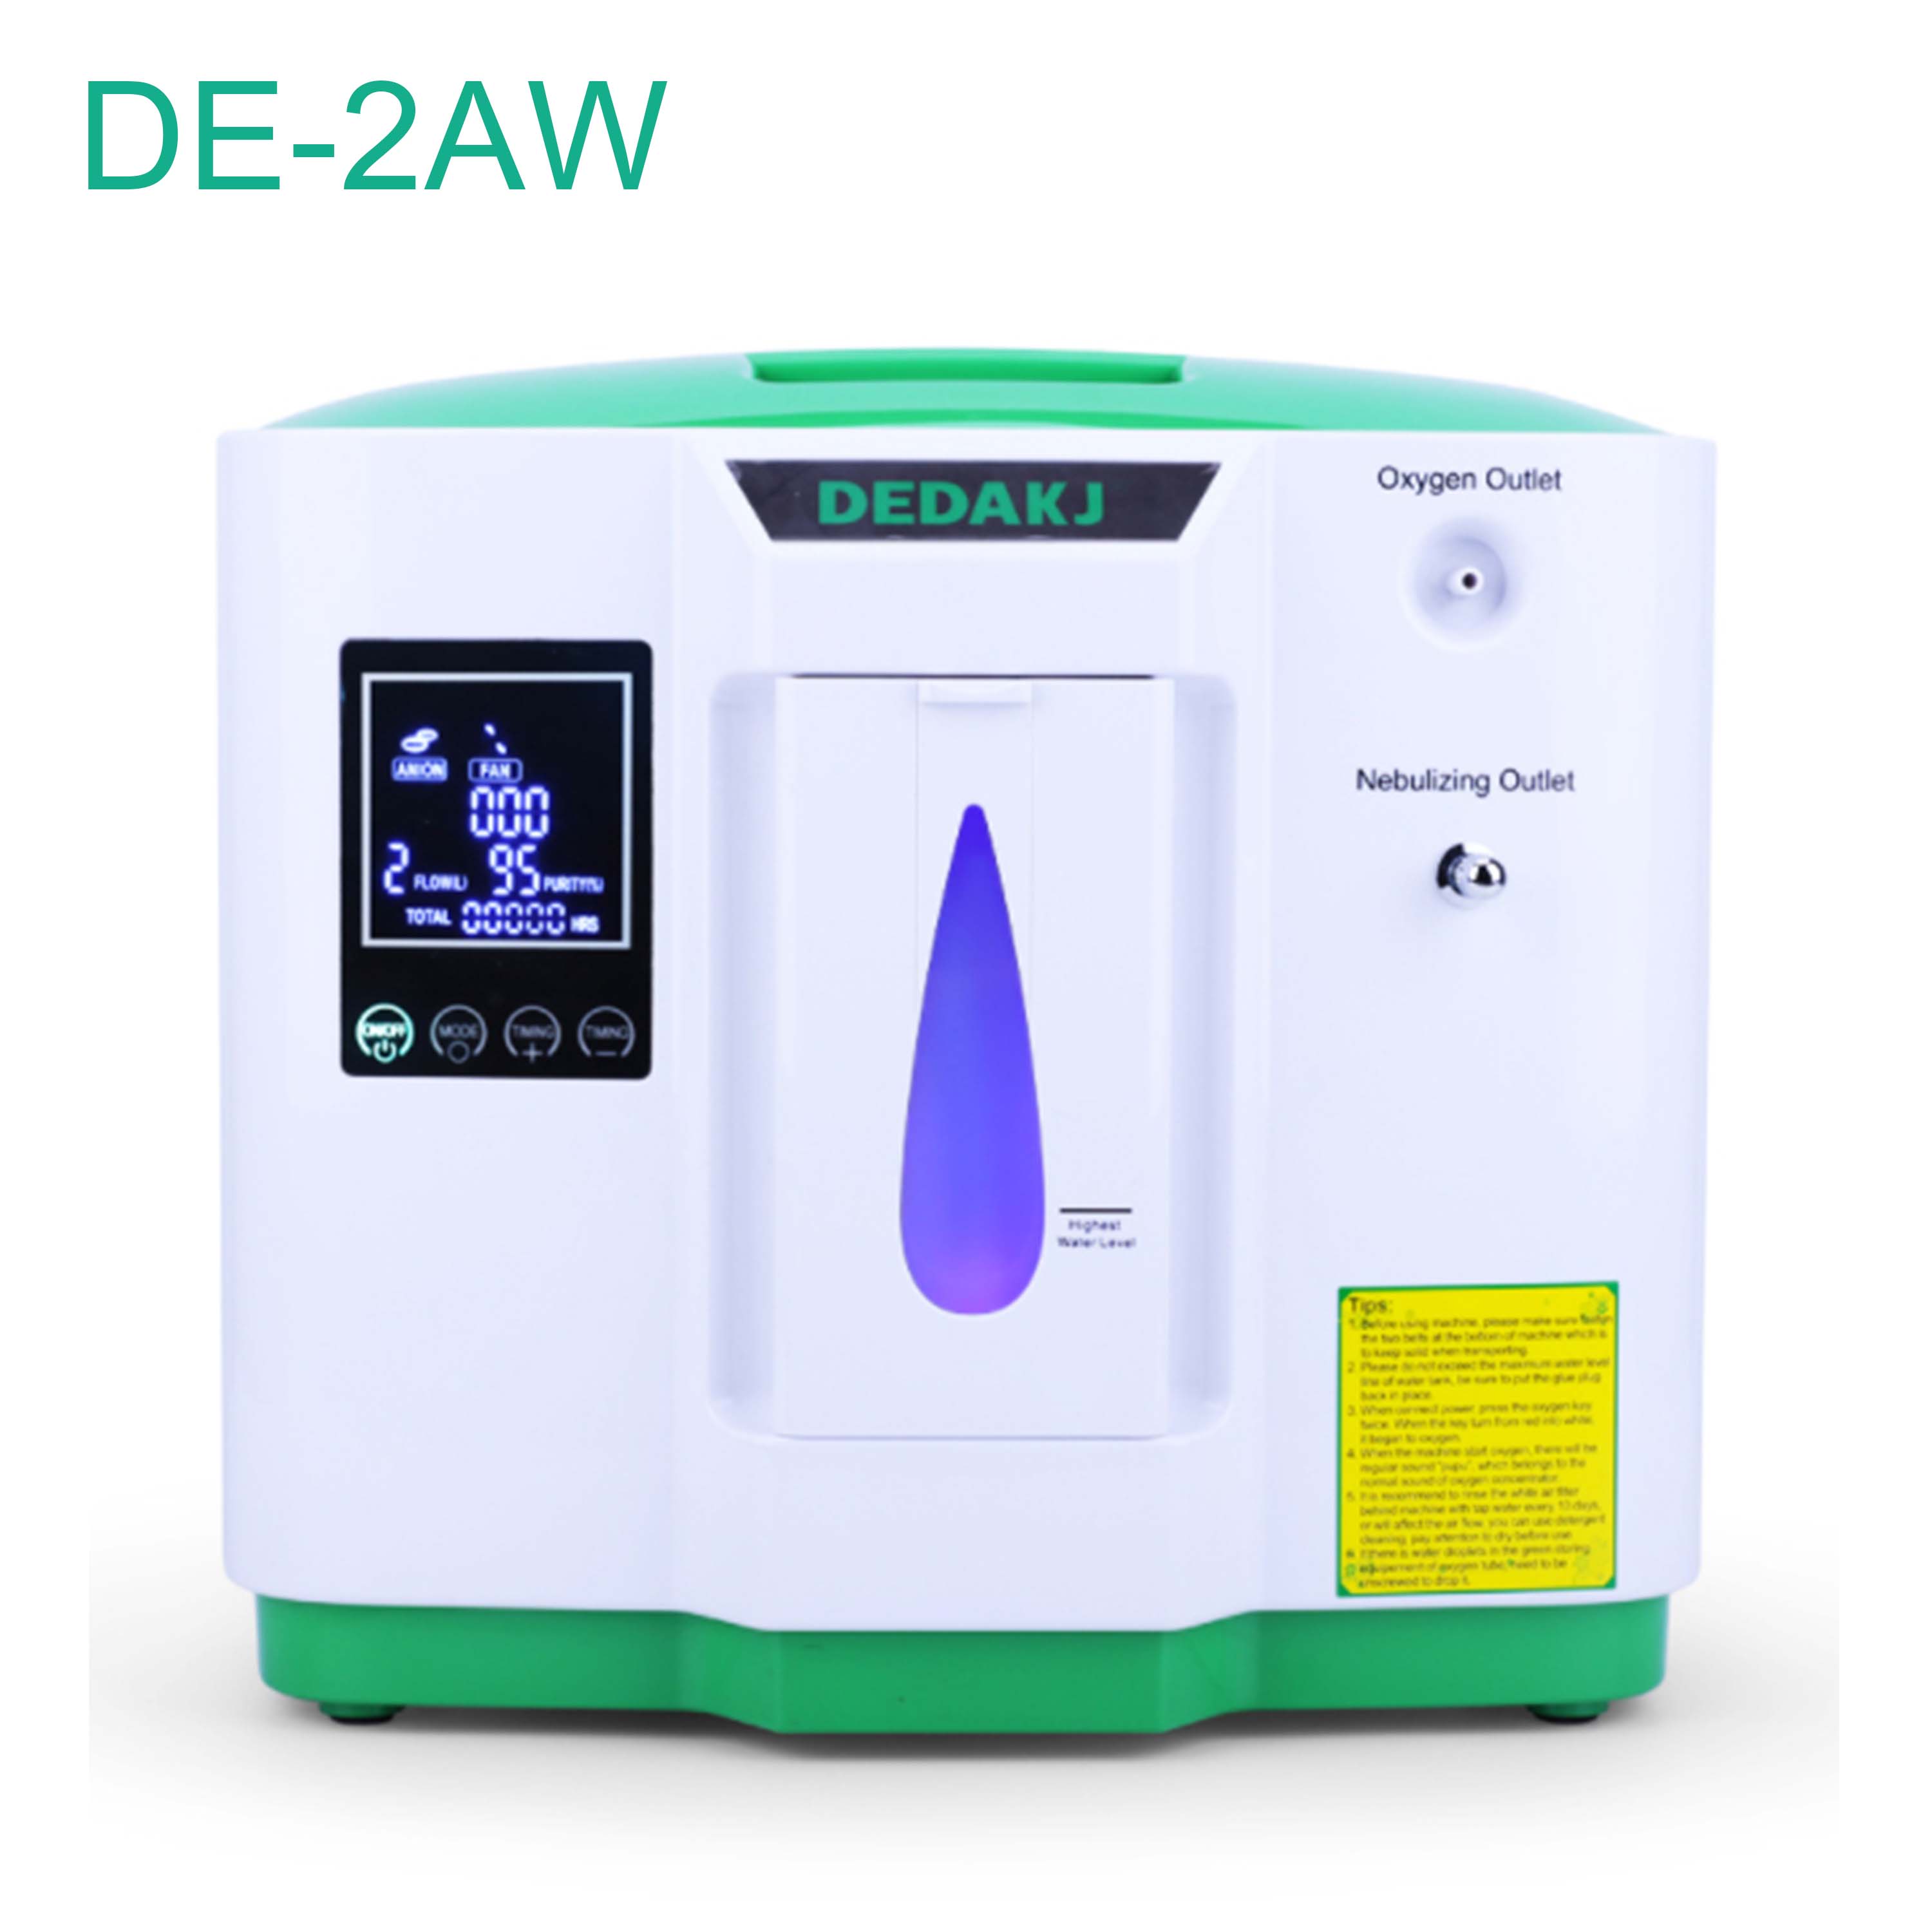 DE-2AW Oxygen concentrator